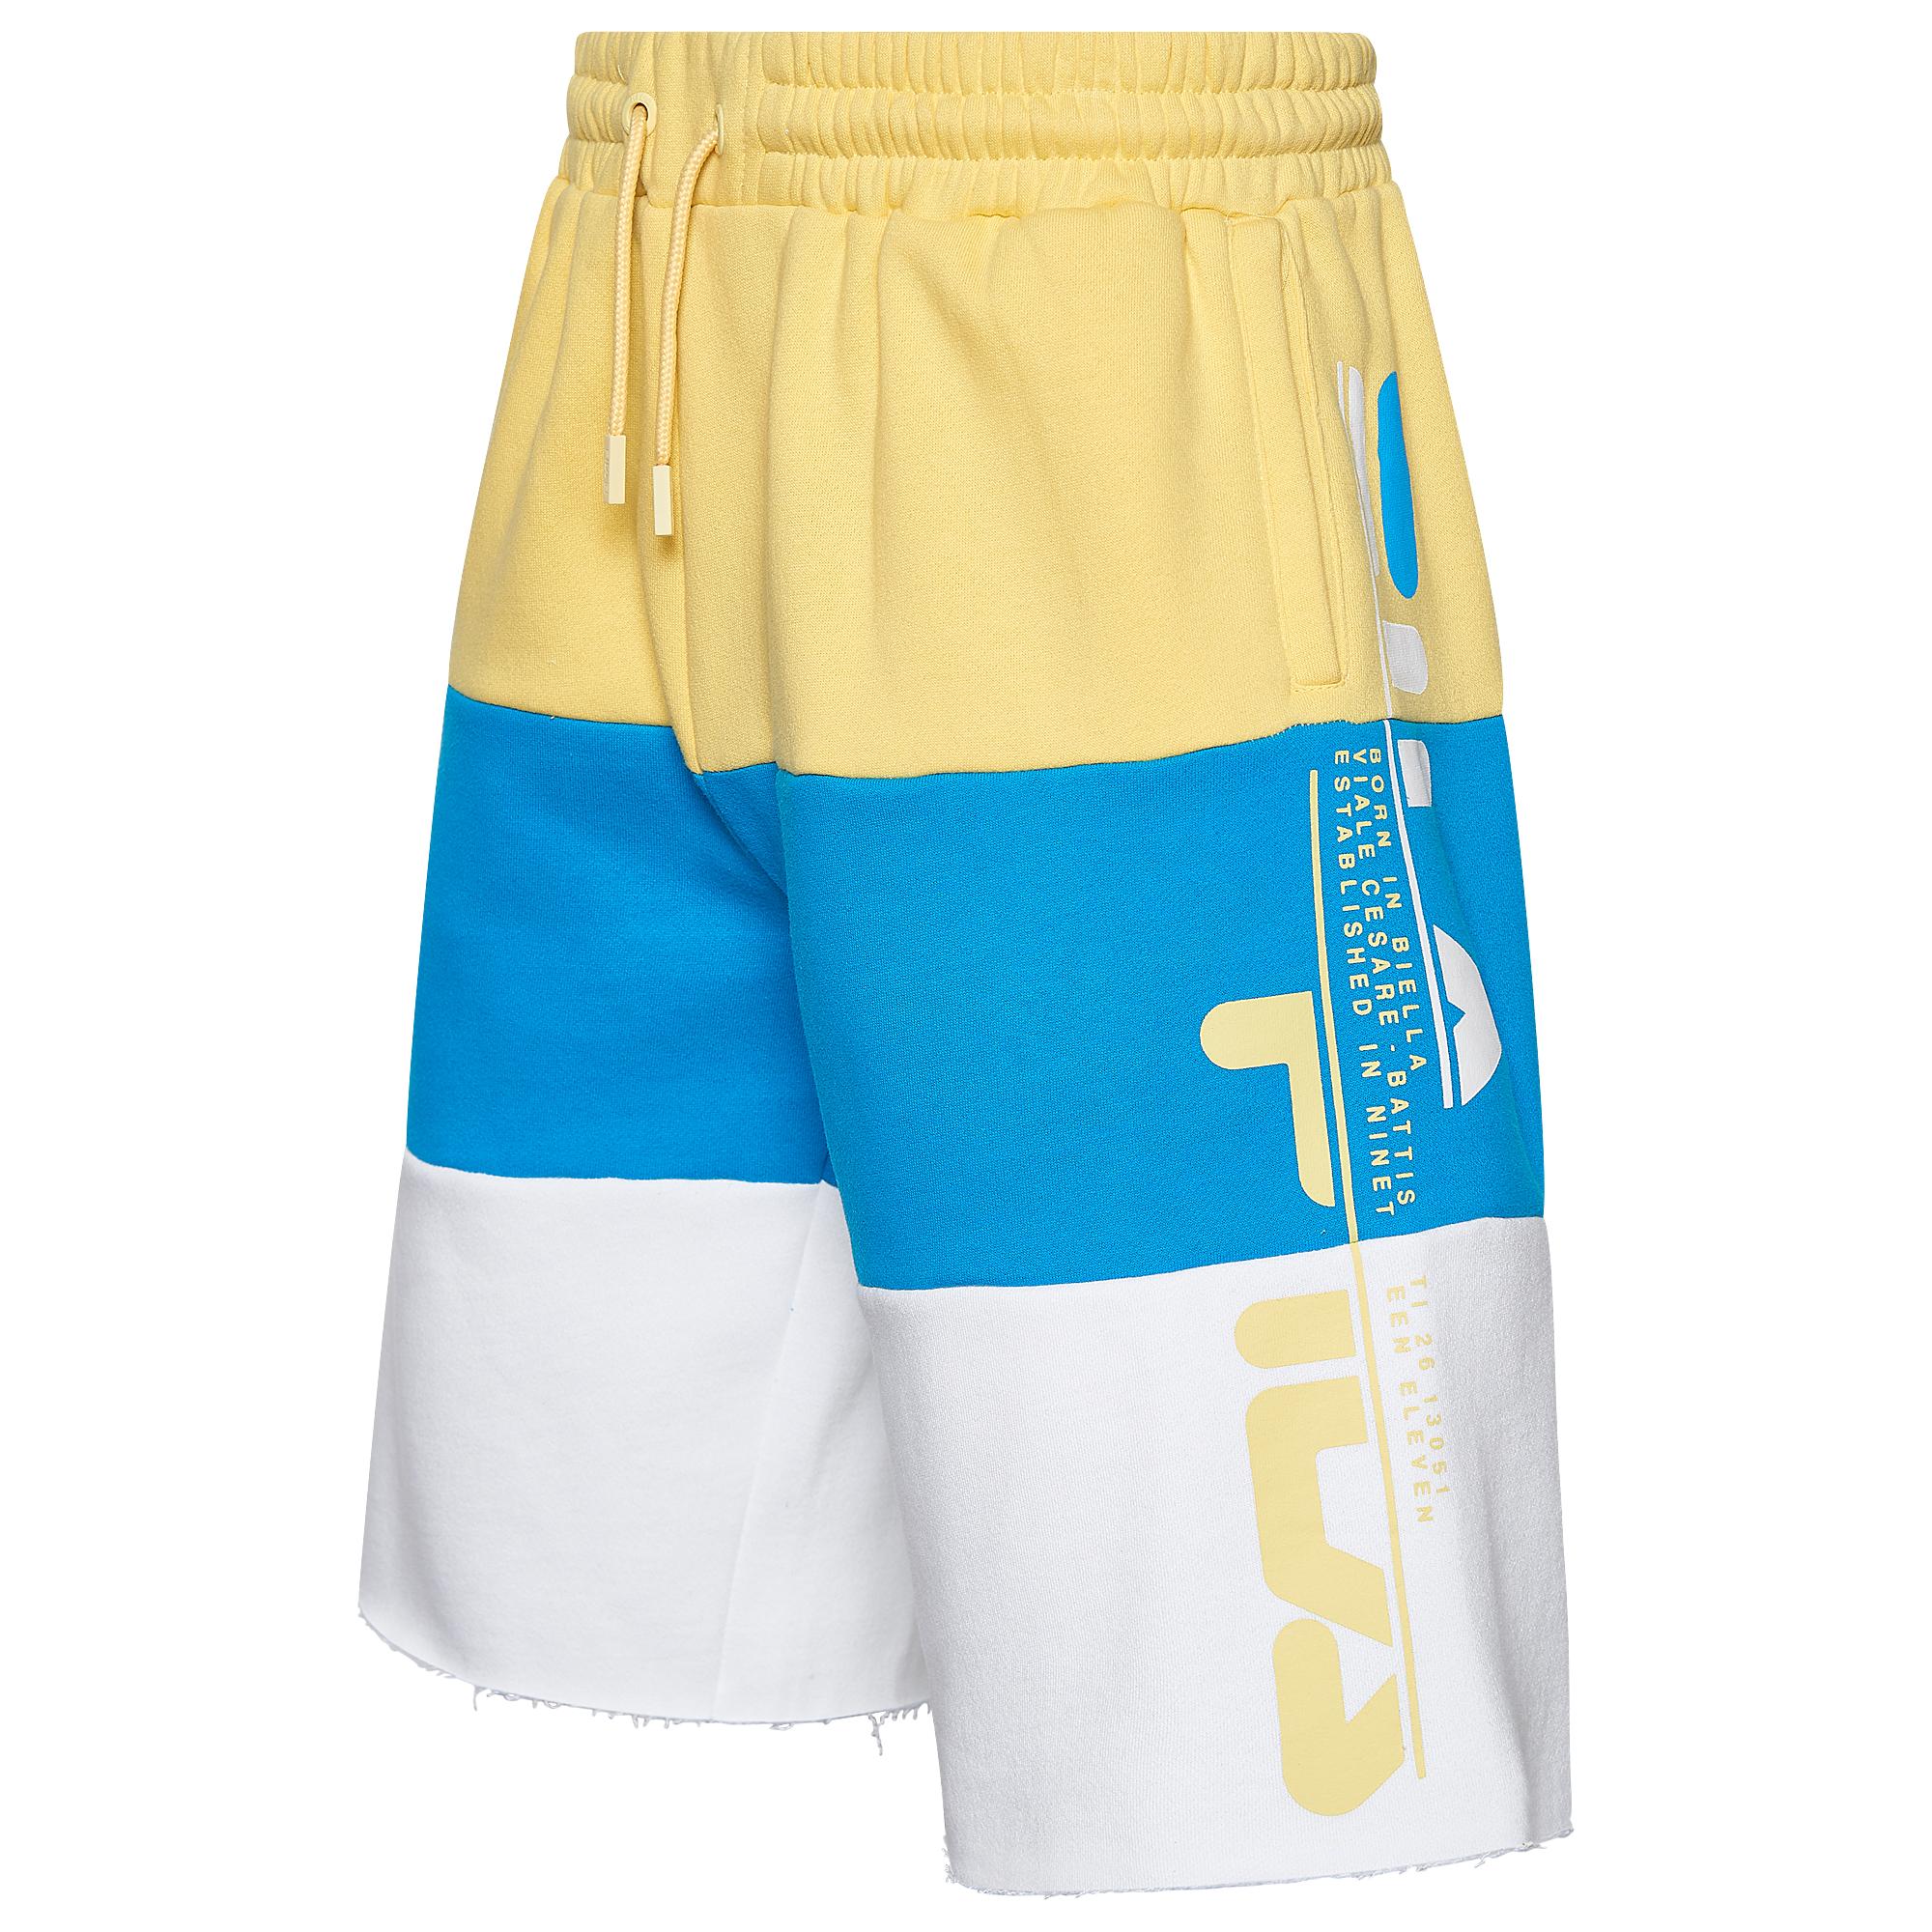 Fila Cotton Stu Shorts in Yellow/Blue 